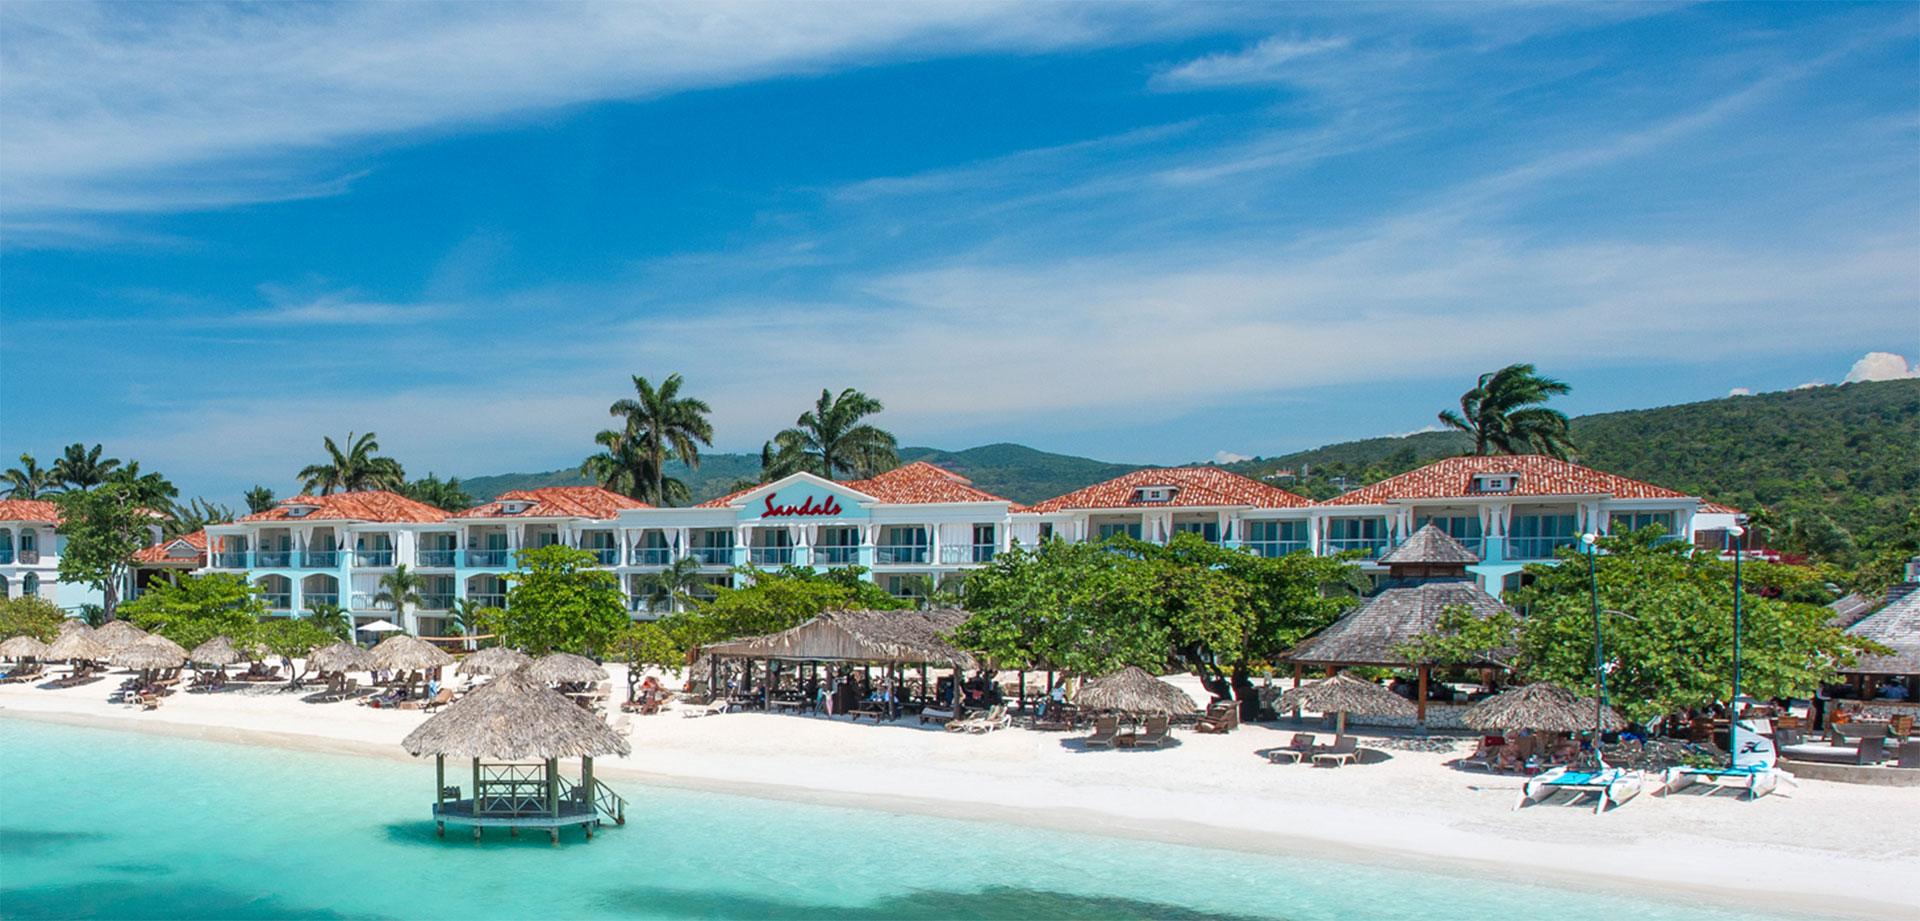 Palm Suites at Sandals Montego Bay Resort in Jamaica